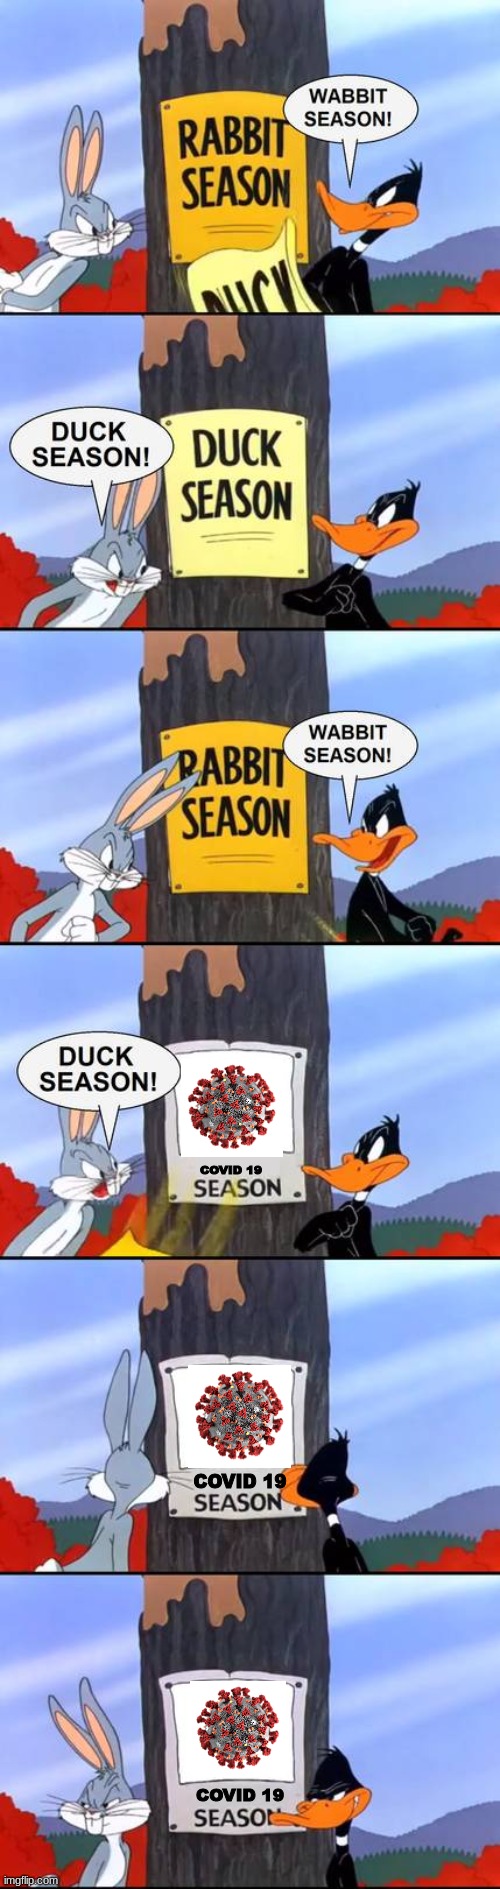 Covid-19 season | COVID 19; COVID 19; COVID 19 | image tagged in wabbit season duck season elmer season,covid-19,looney tunes,season,memes | made w/ Imgflip meme maker